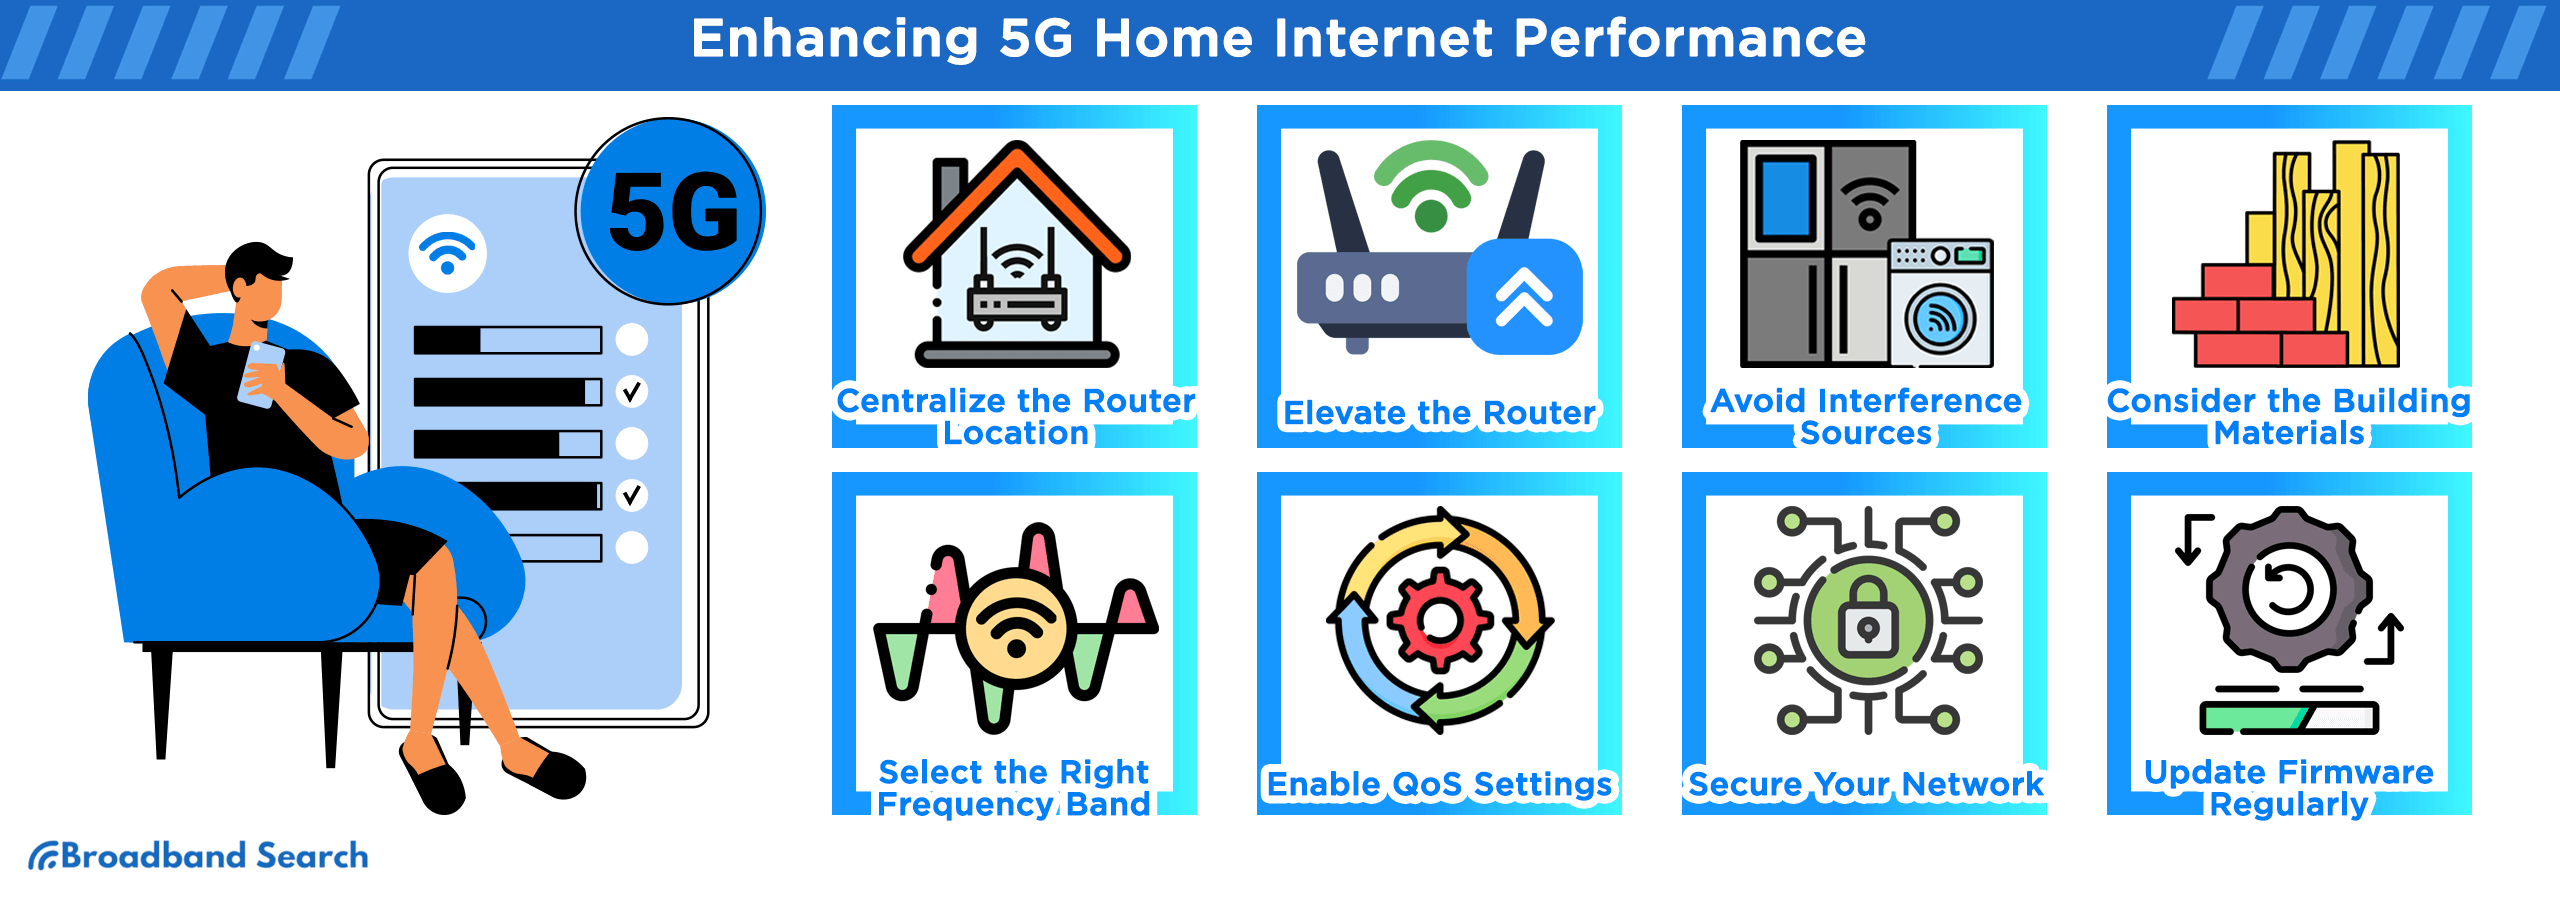 Enhancing 5G home internet performance